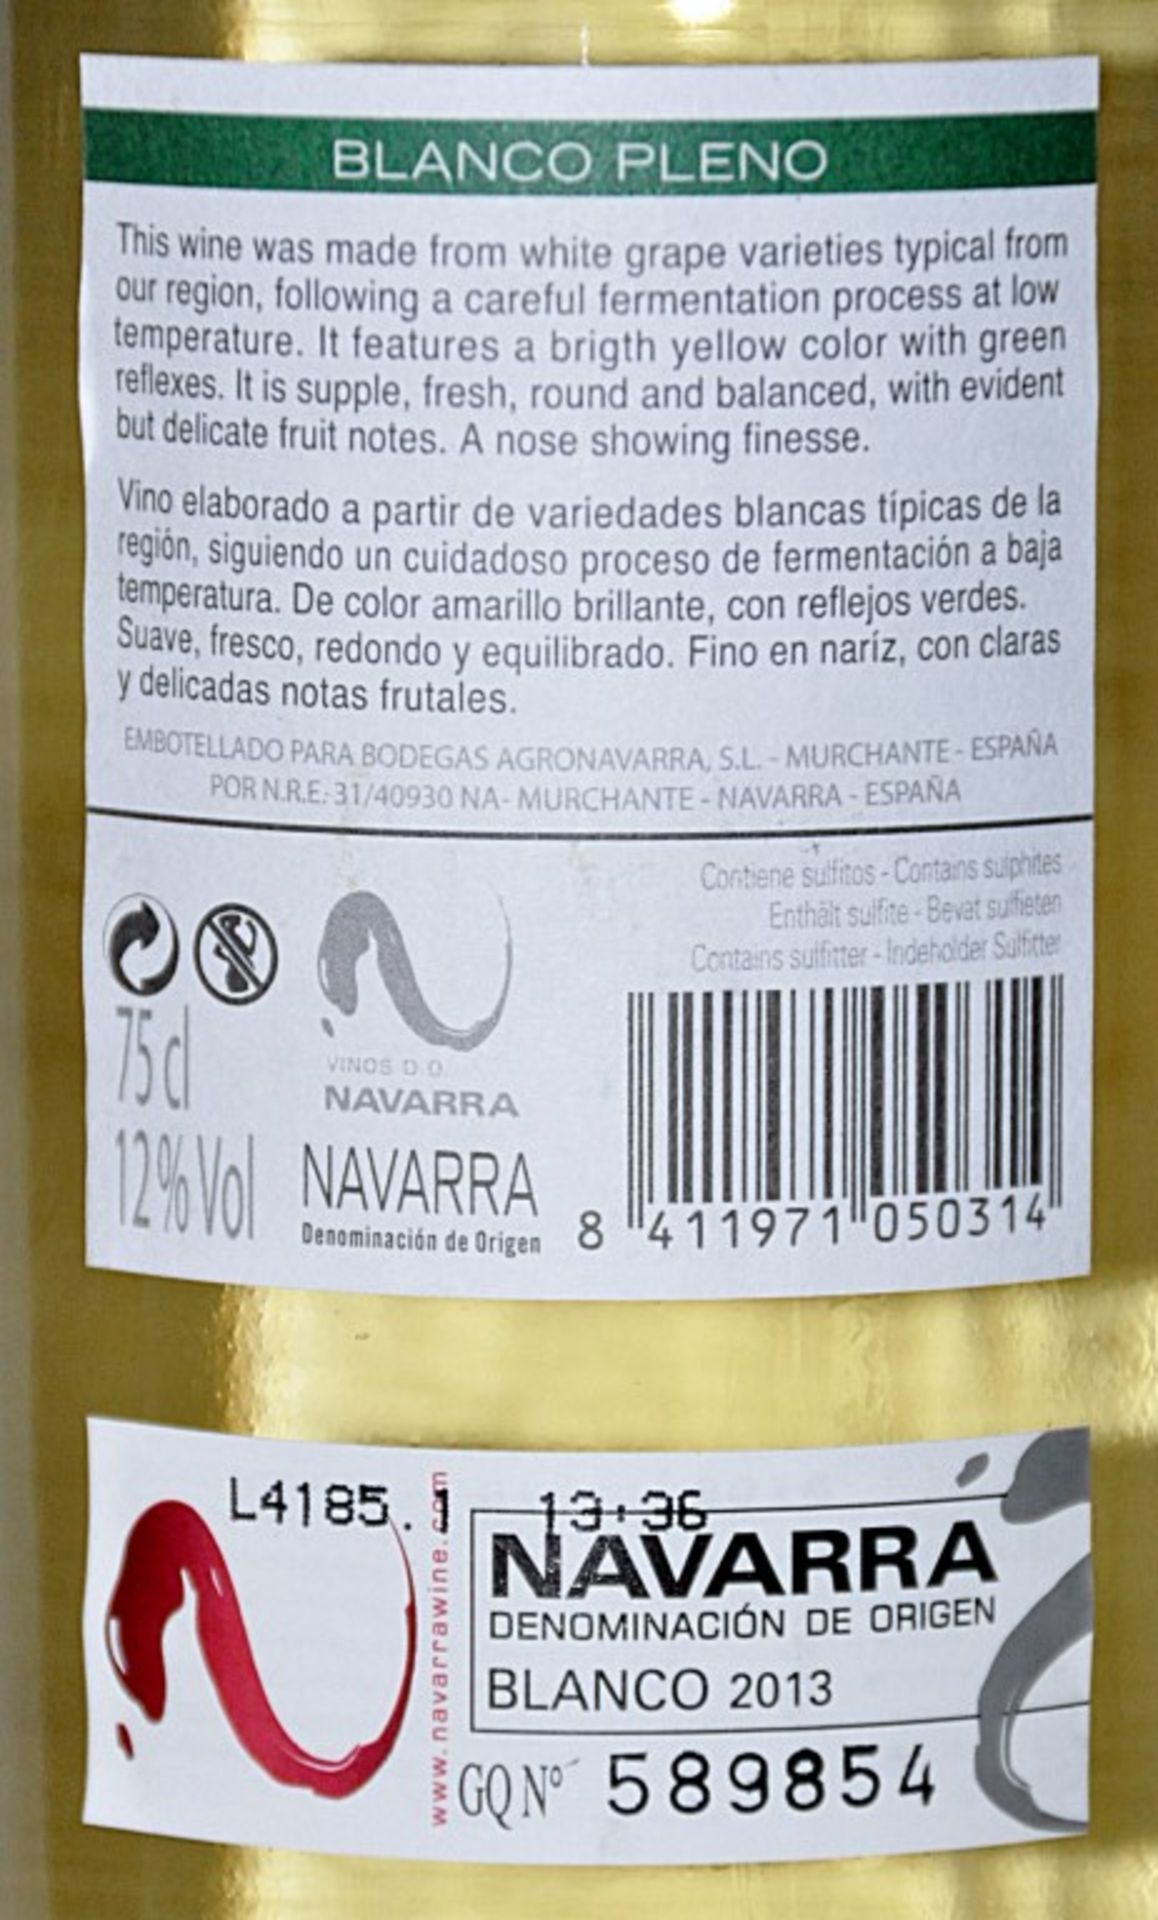 4 x Principe de Viana - Bodegas Brana Vieja Pleno Blanco, Navarra, Spain – 2013 - Bottle Size 75cl - - Image 2 of 4